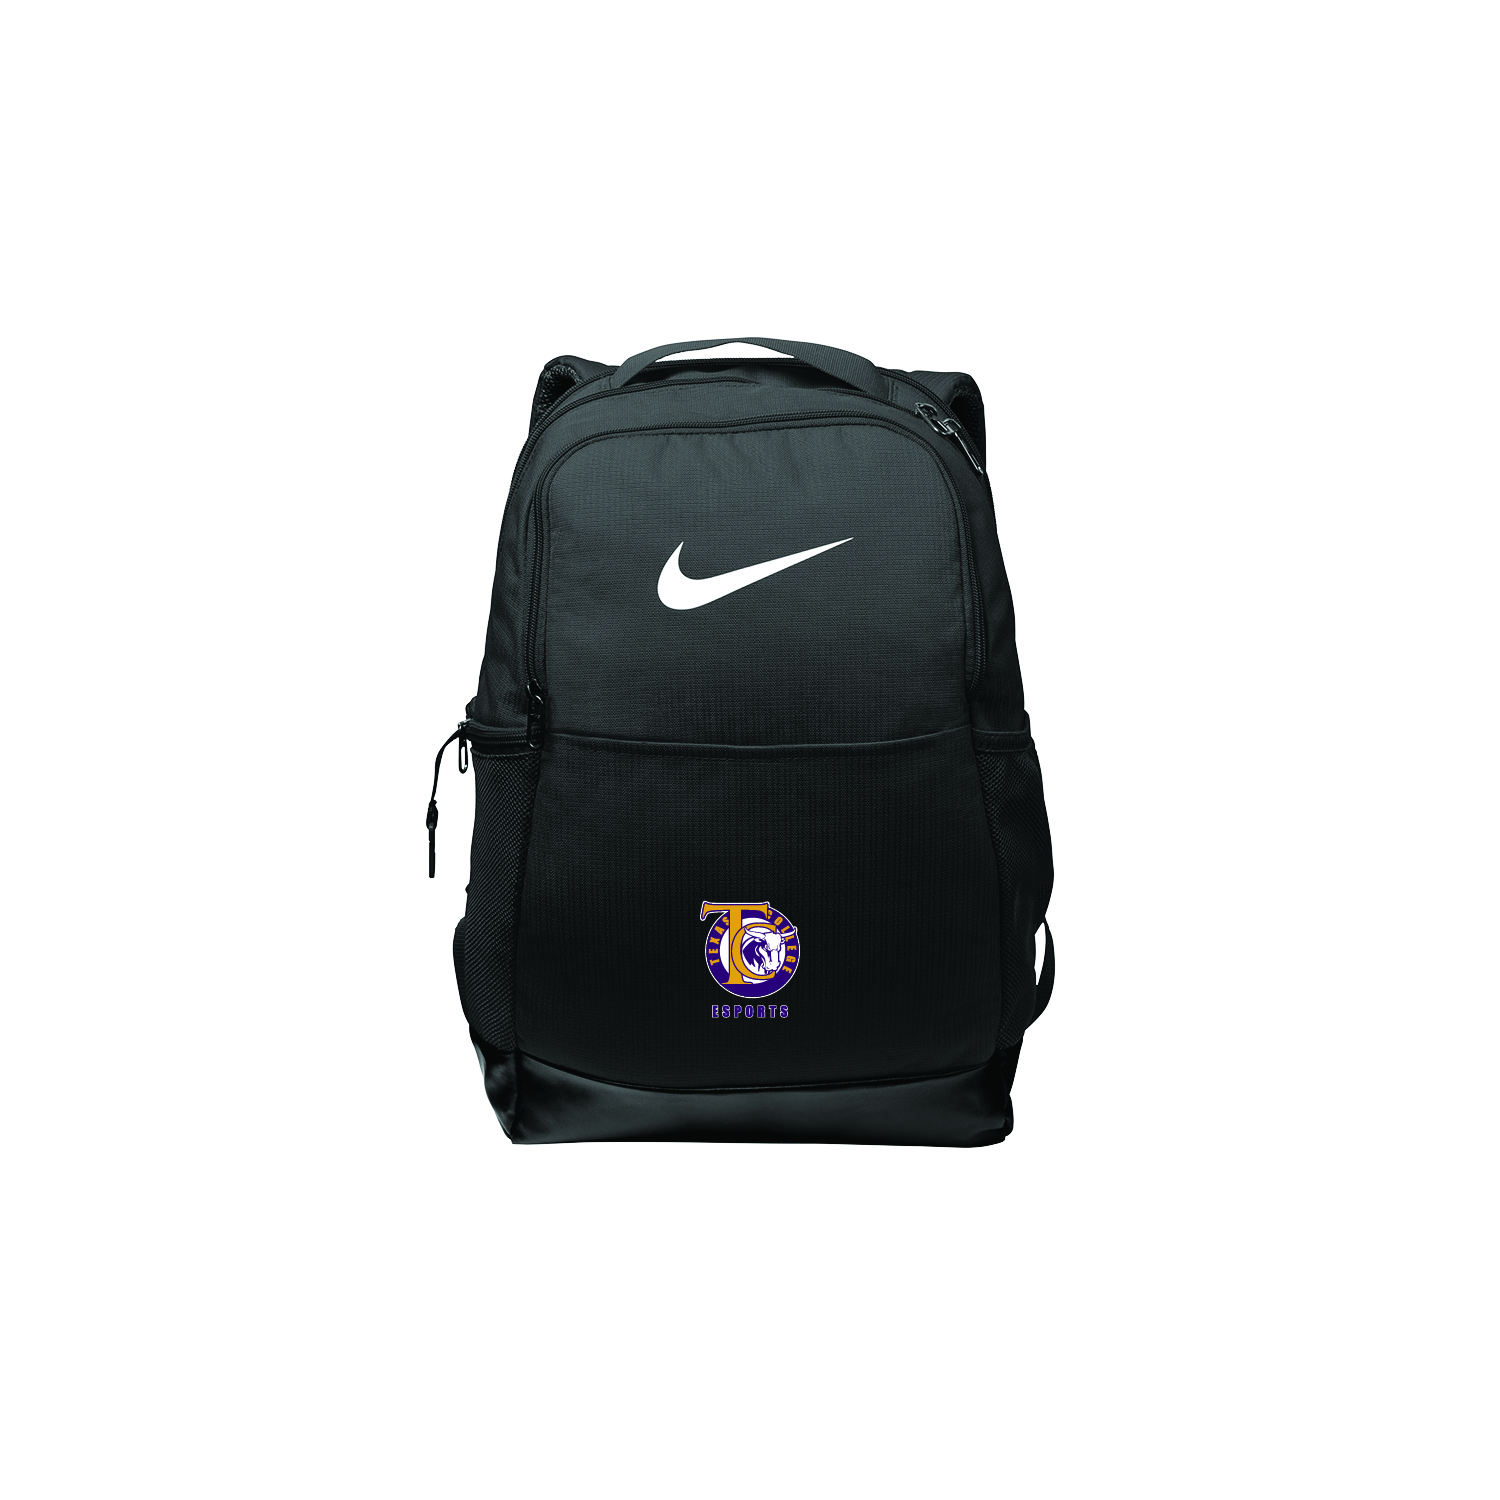 TEXAS COLLEGE   Nike Brasilia Medium Backpack